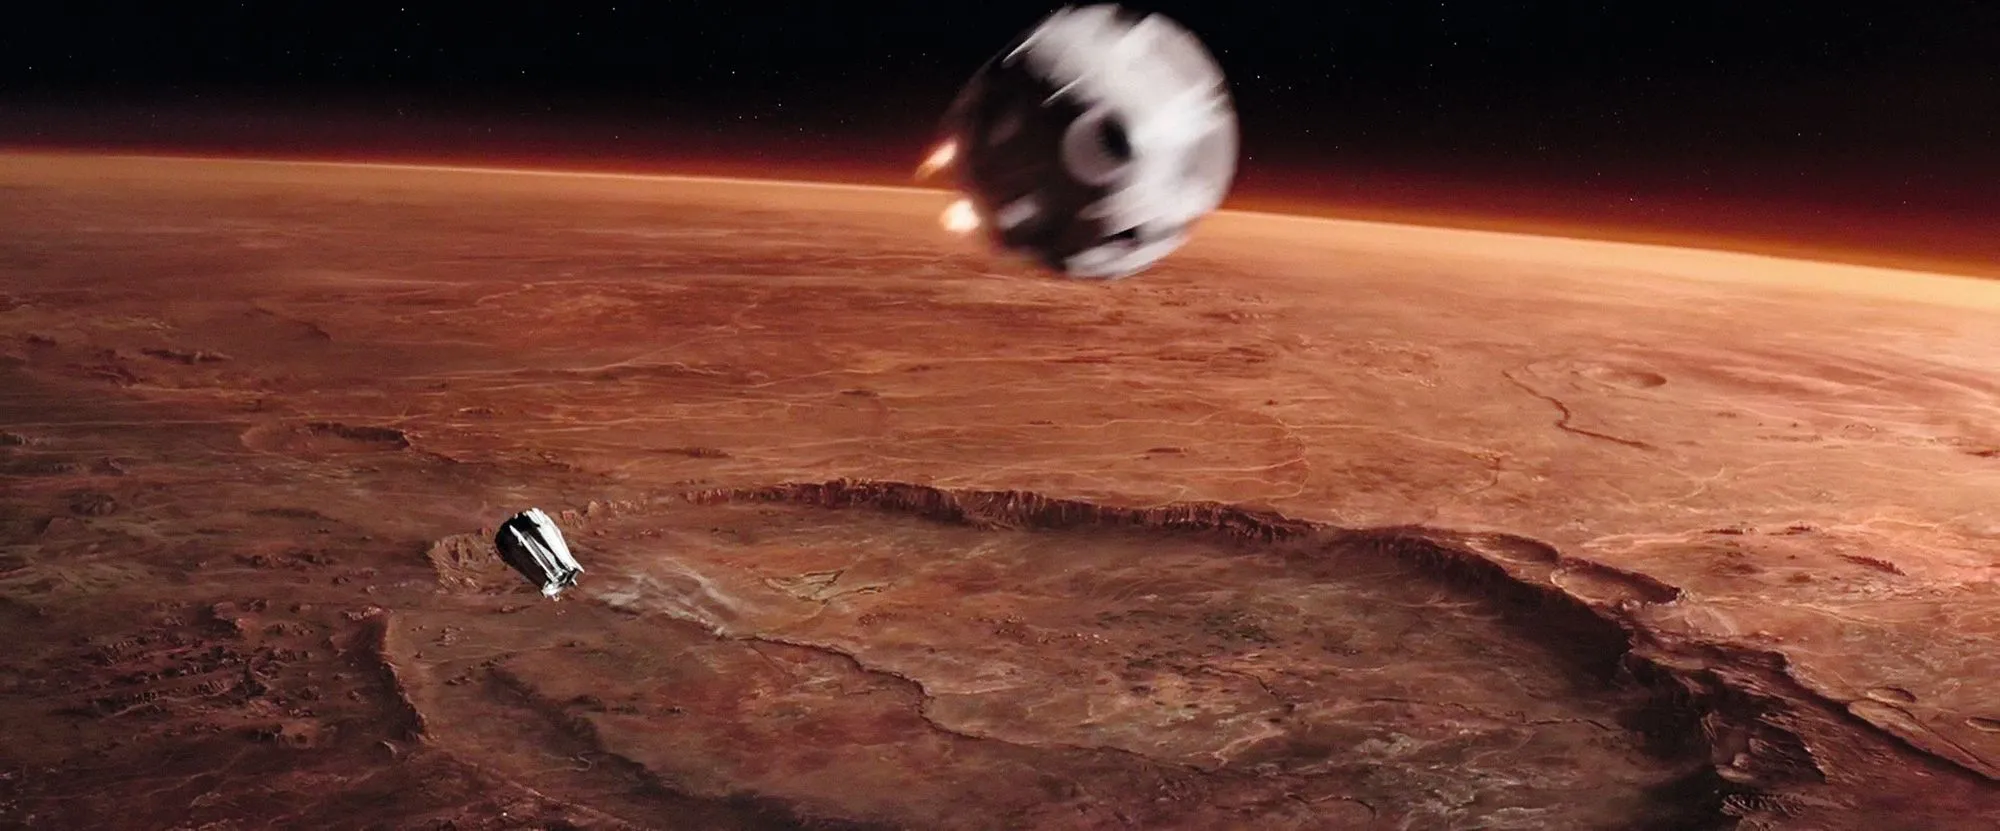 Seul sur Mars, film de Ridley Scott, 2015